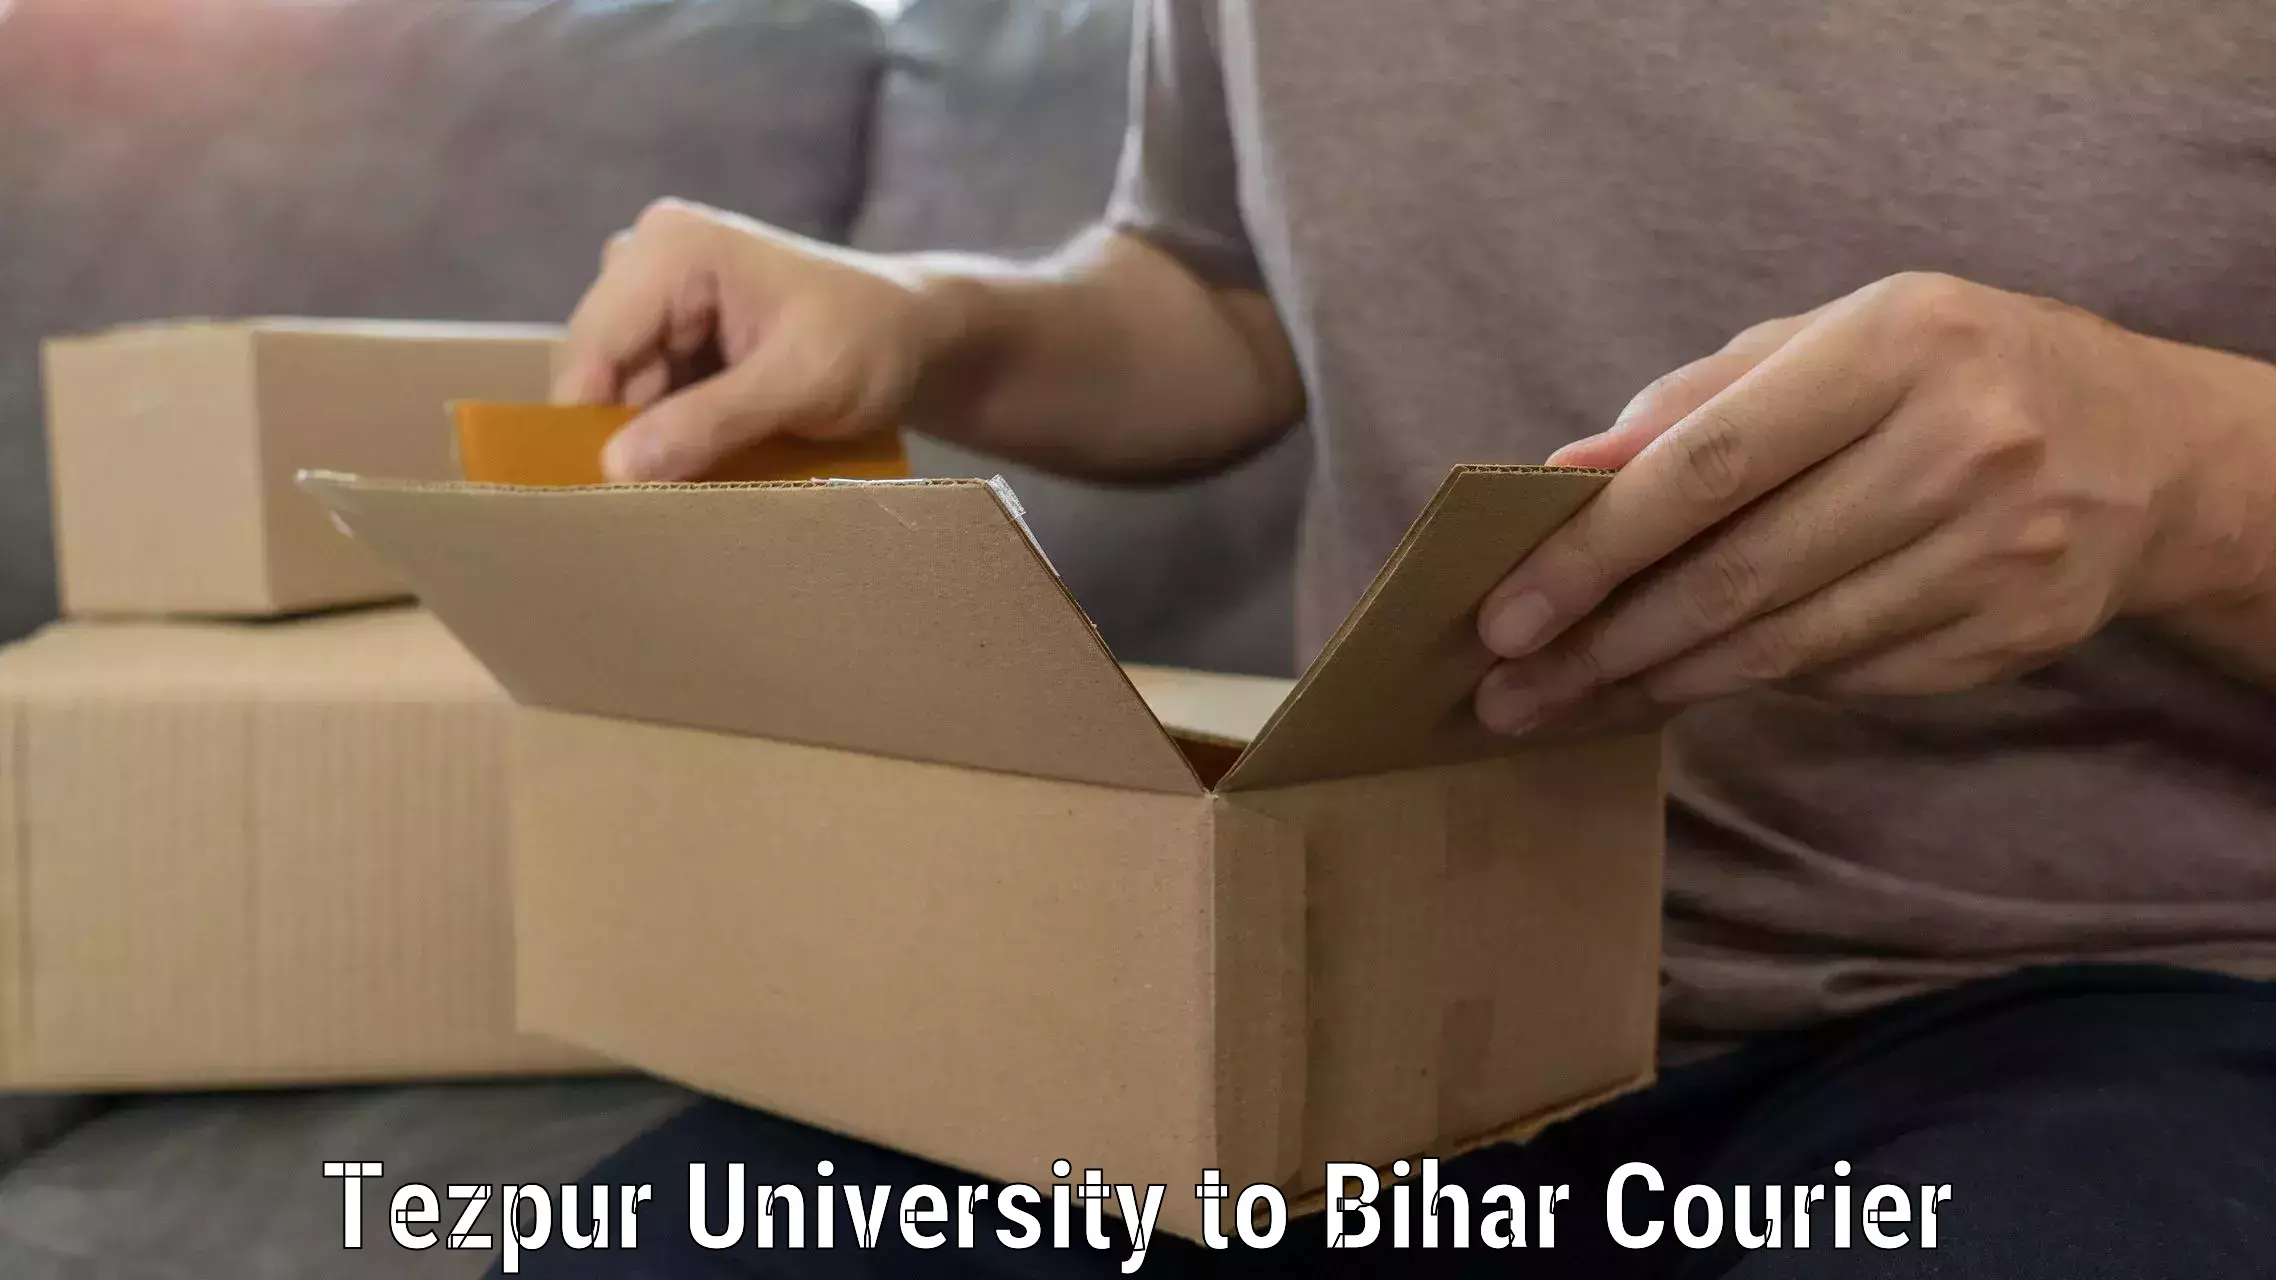 Furniture transport company in Tezpur University to Bihar